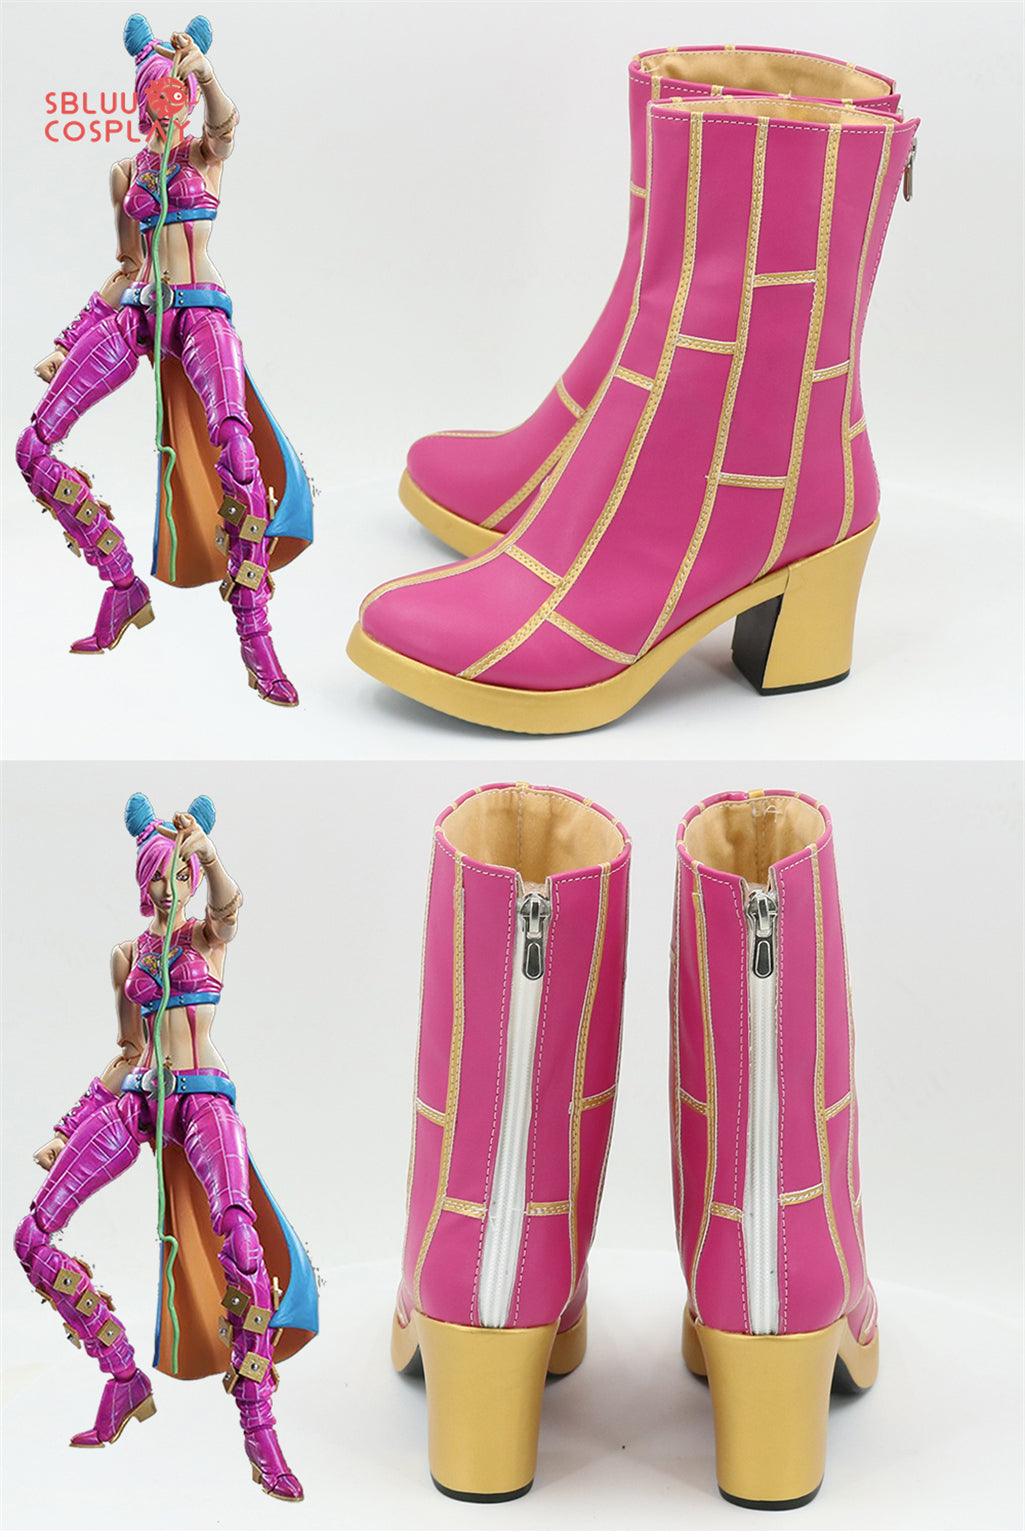 JoJo's Bizarre Adventure Jolyne Cujoh Pink Cosplay Shoes Custom Made Boots - SBluuCosplay